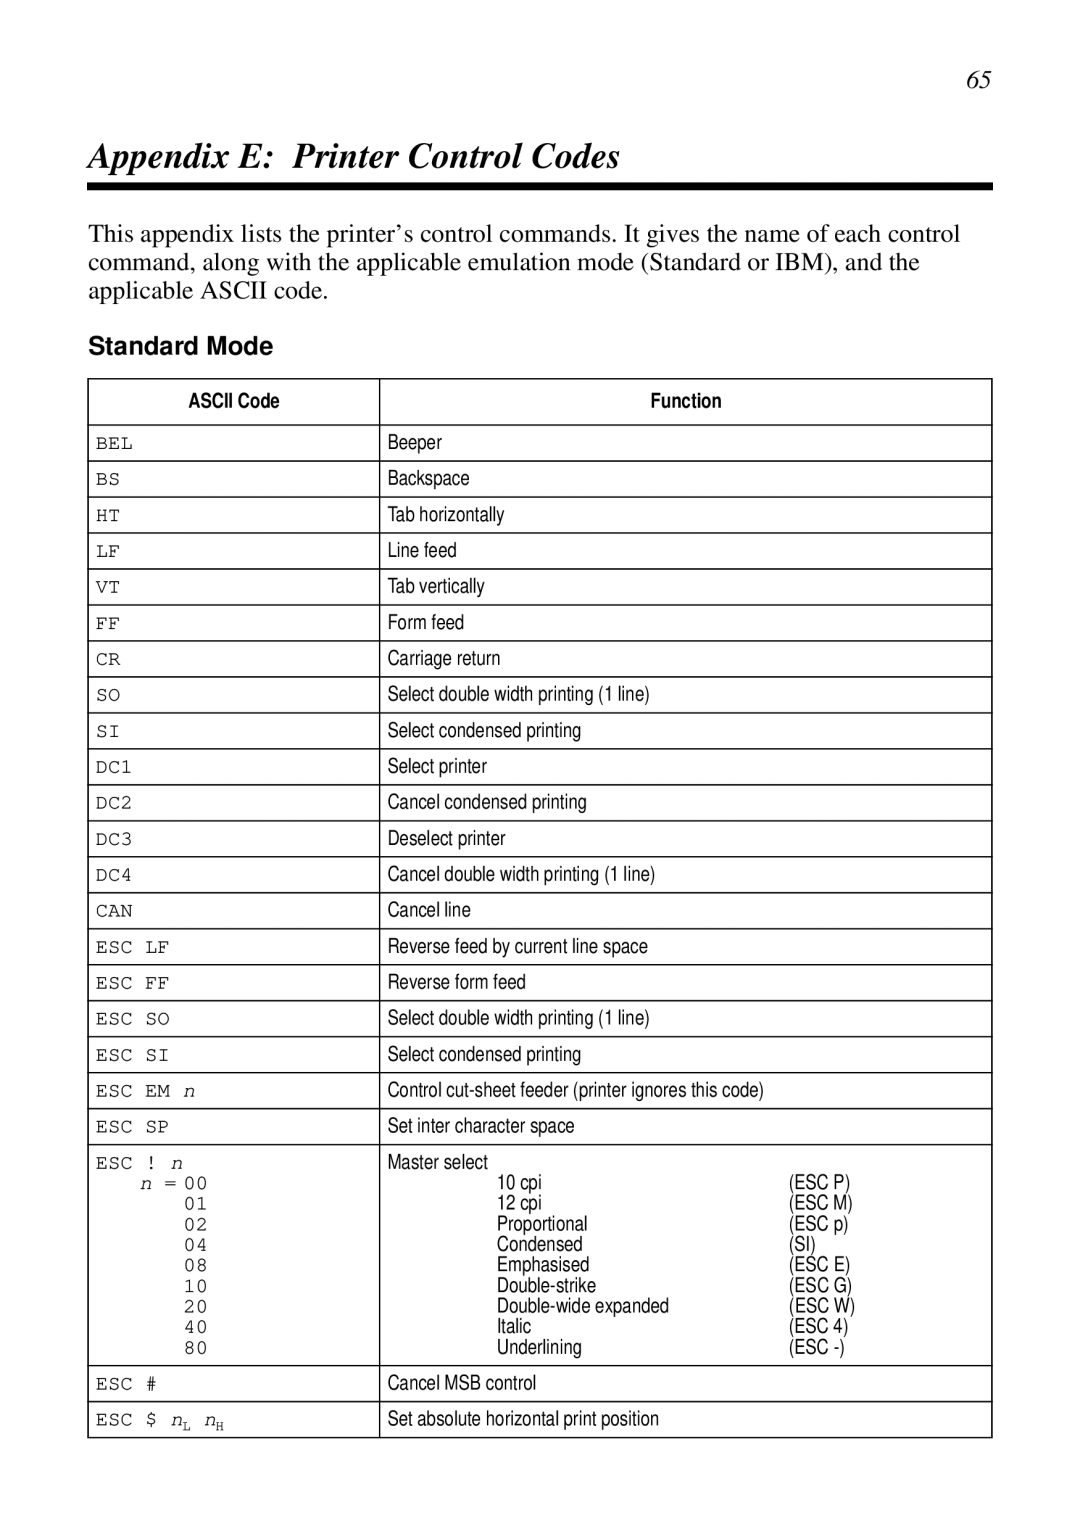 Star Micronics LC-8021 manual Appendix E Printer Control Codes, Standard Mode 